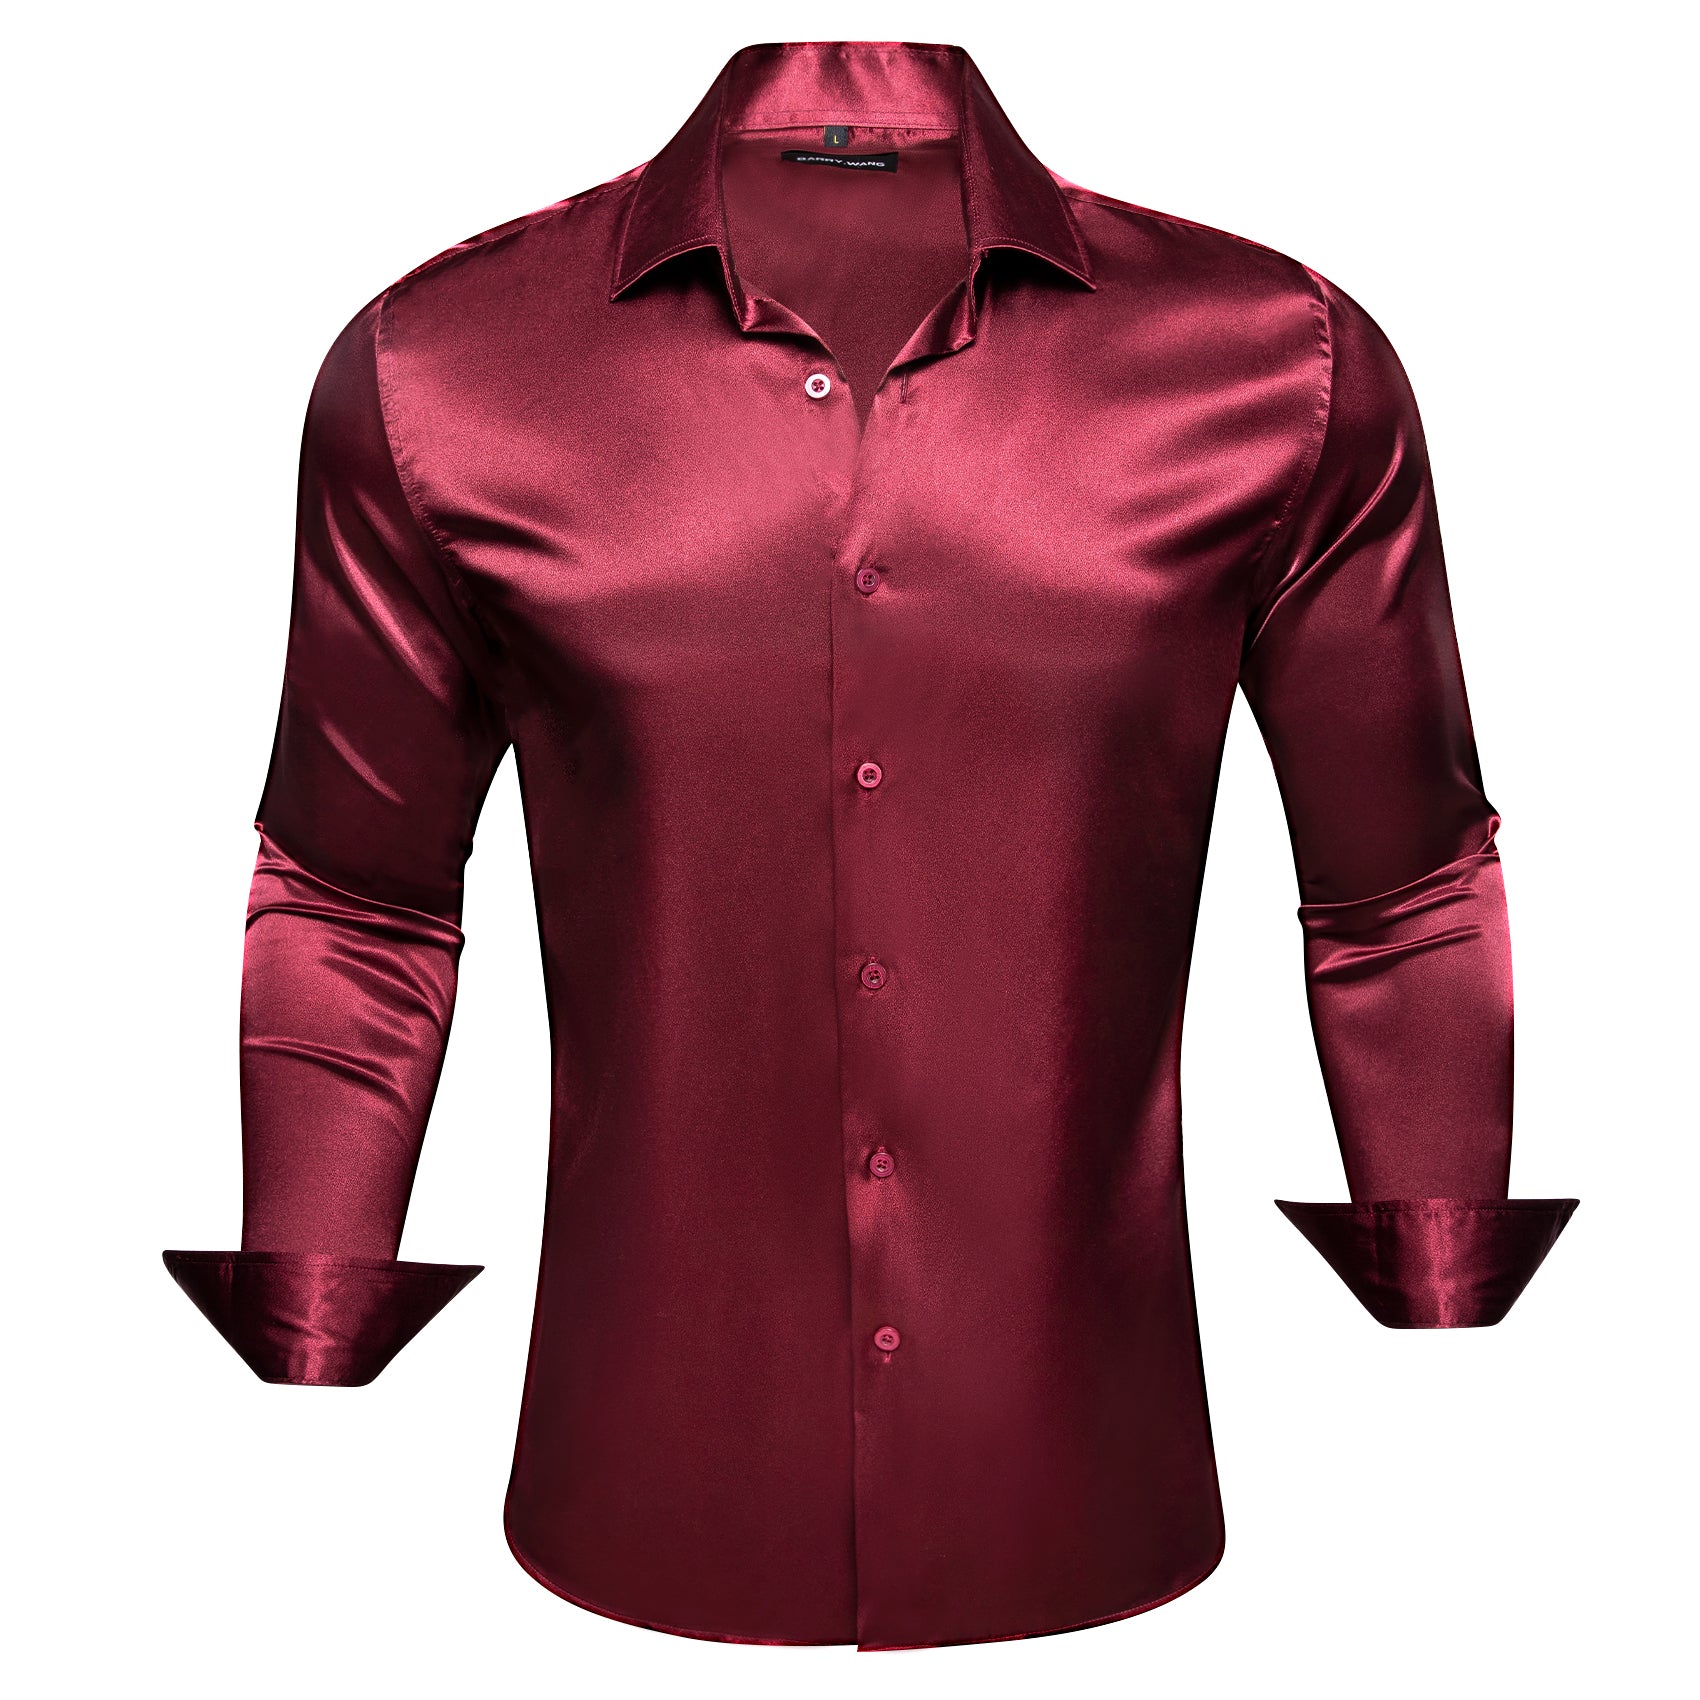 Barry.wang Long Sleeve Shirt Maroon Red Solid Silk Men's Shirt